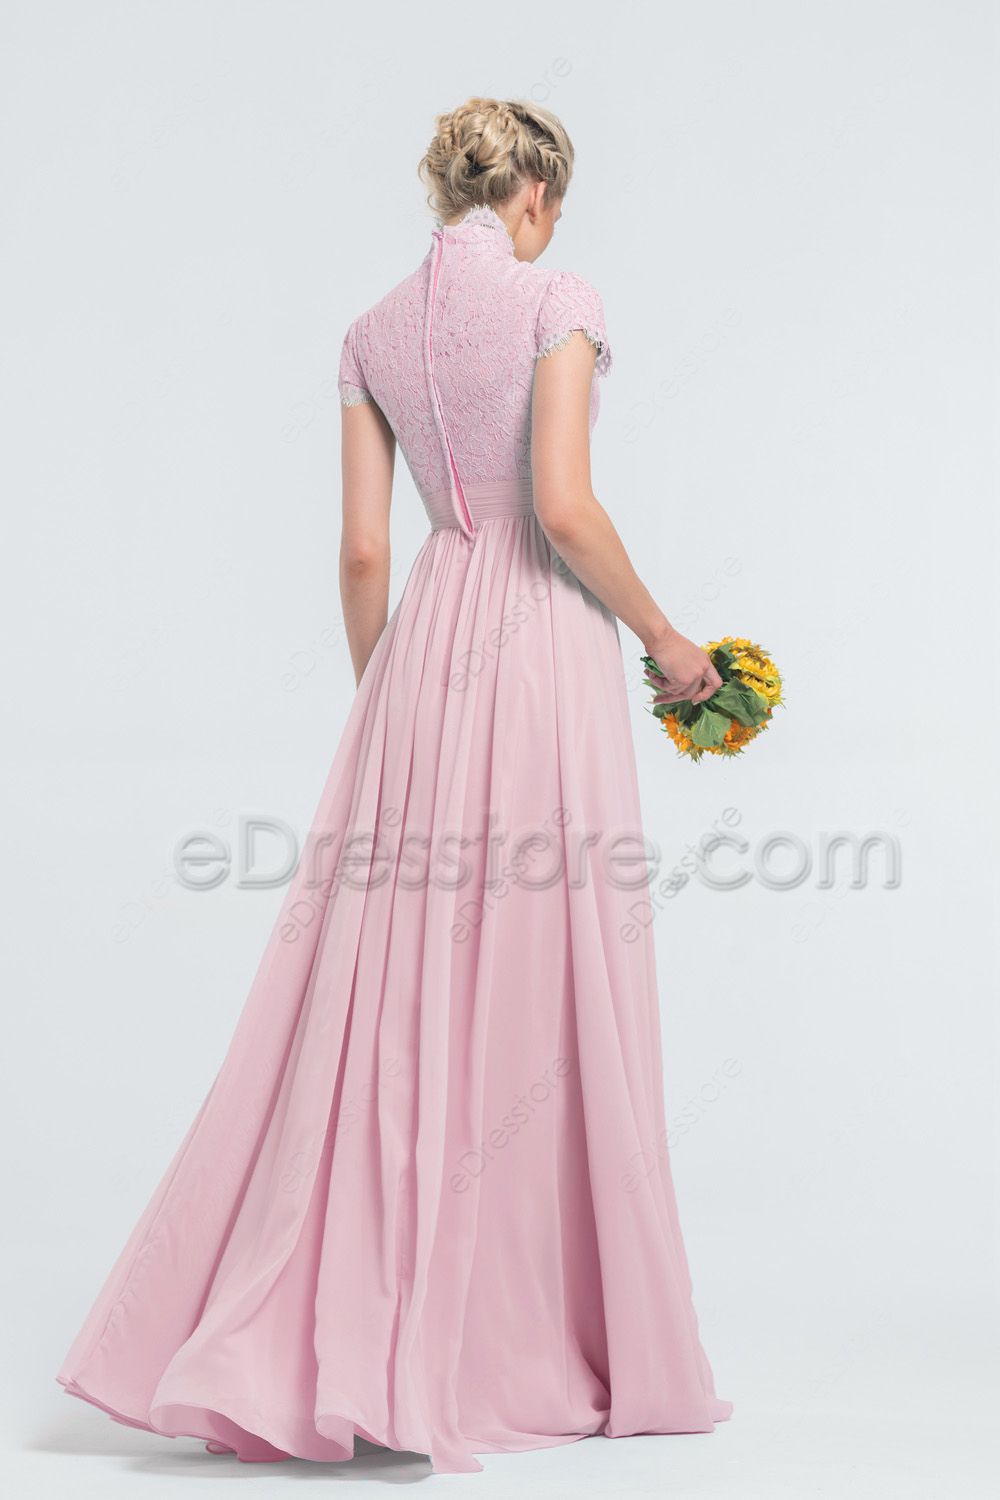 Modest Lace Chiffon Baby Pink Bridesmaid Dresses Cap Sleeves | eDresstore